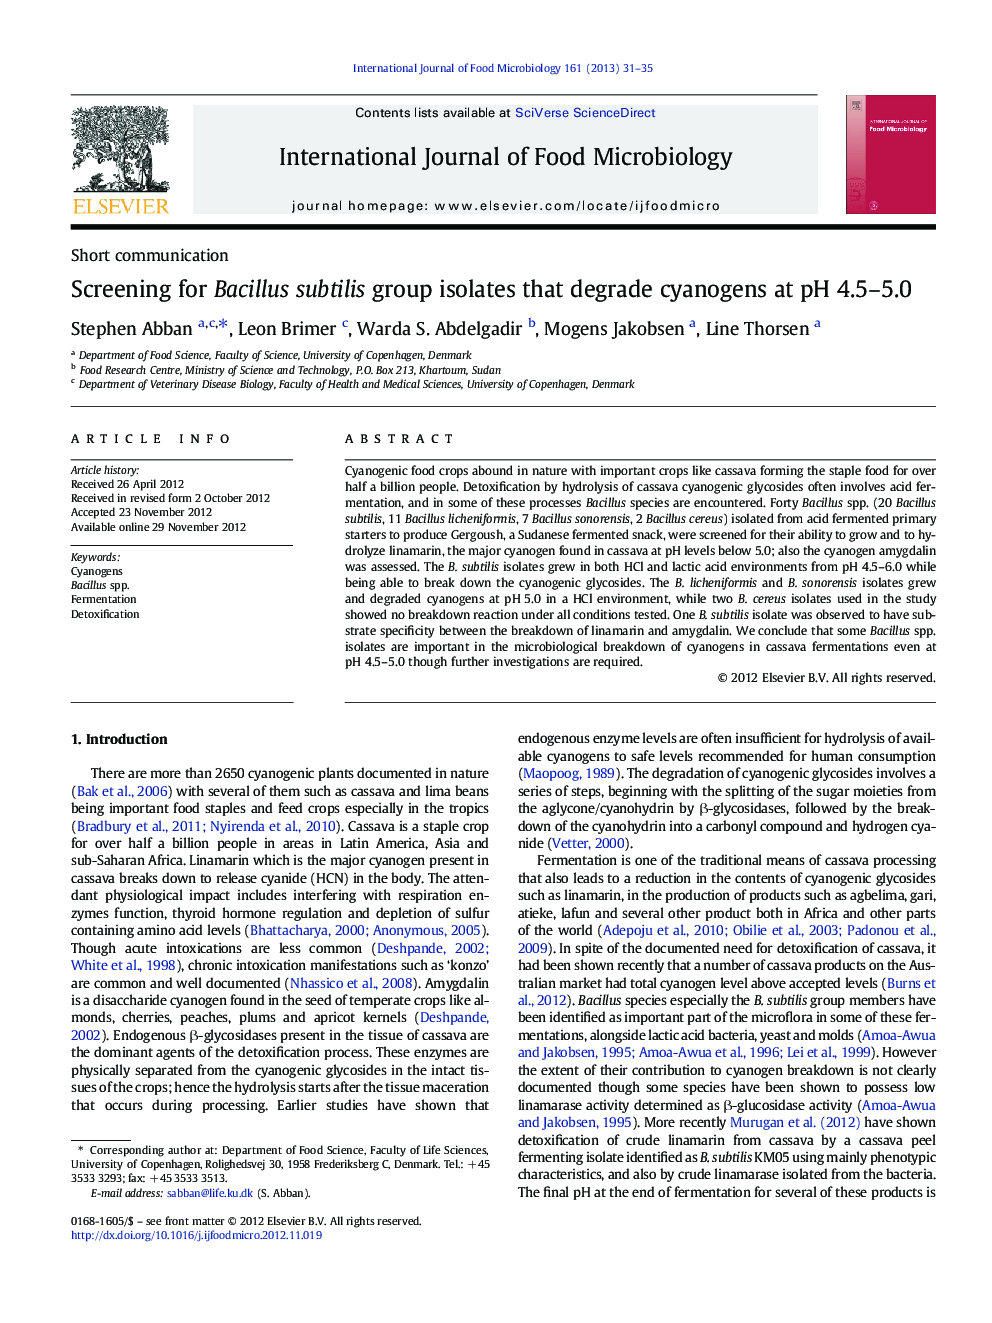 Screening for Bacillus subtilis group isolates that degrade cyanogens at pH 4.5–5.0